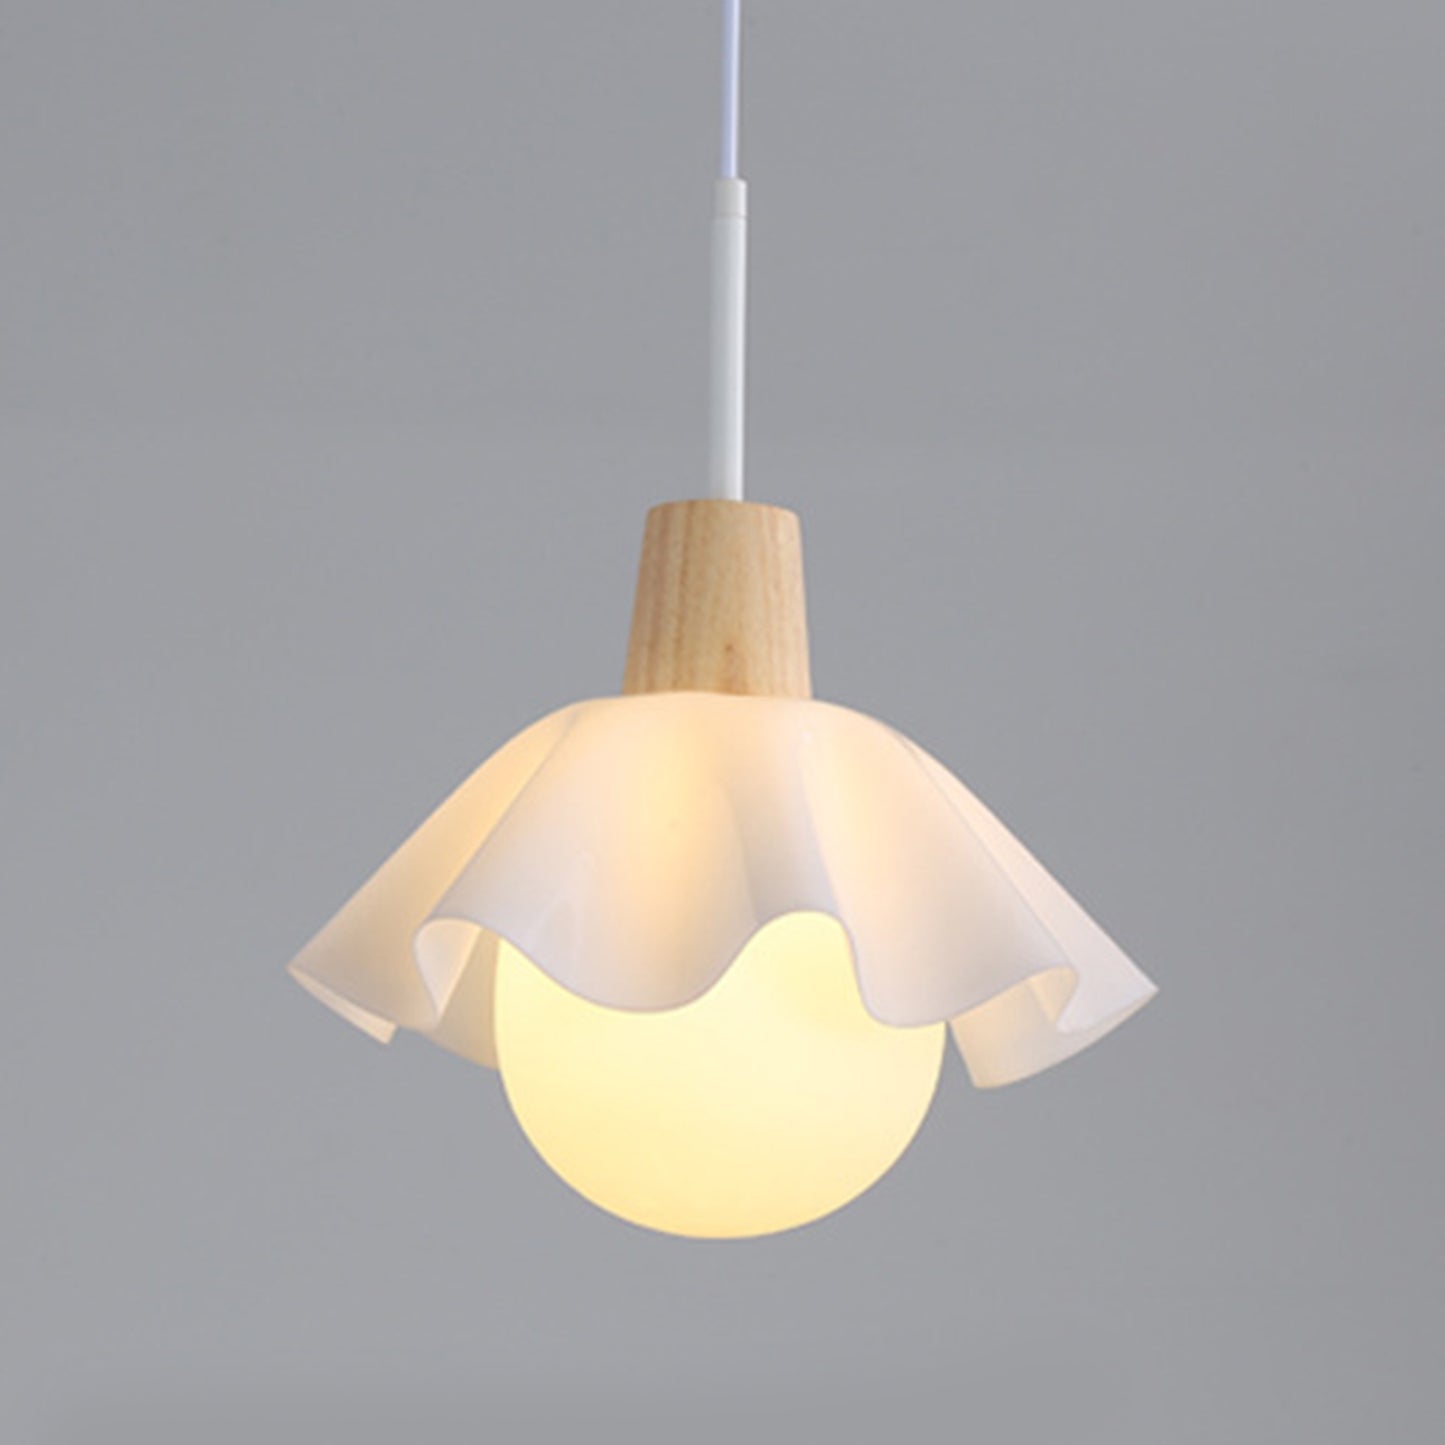 (N) ARTURESTHOME Nordic Modern Personalized Flower Indoor Pendant Lighting Aisle Lighting